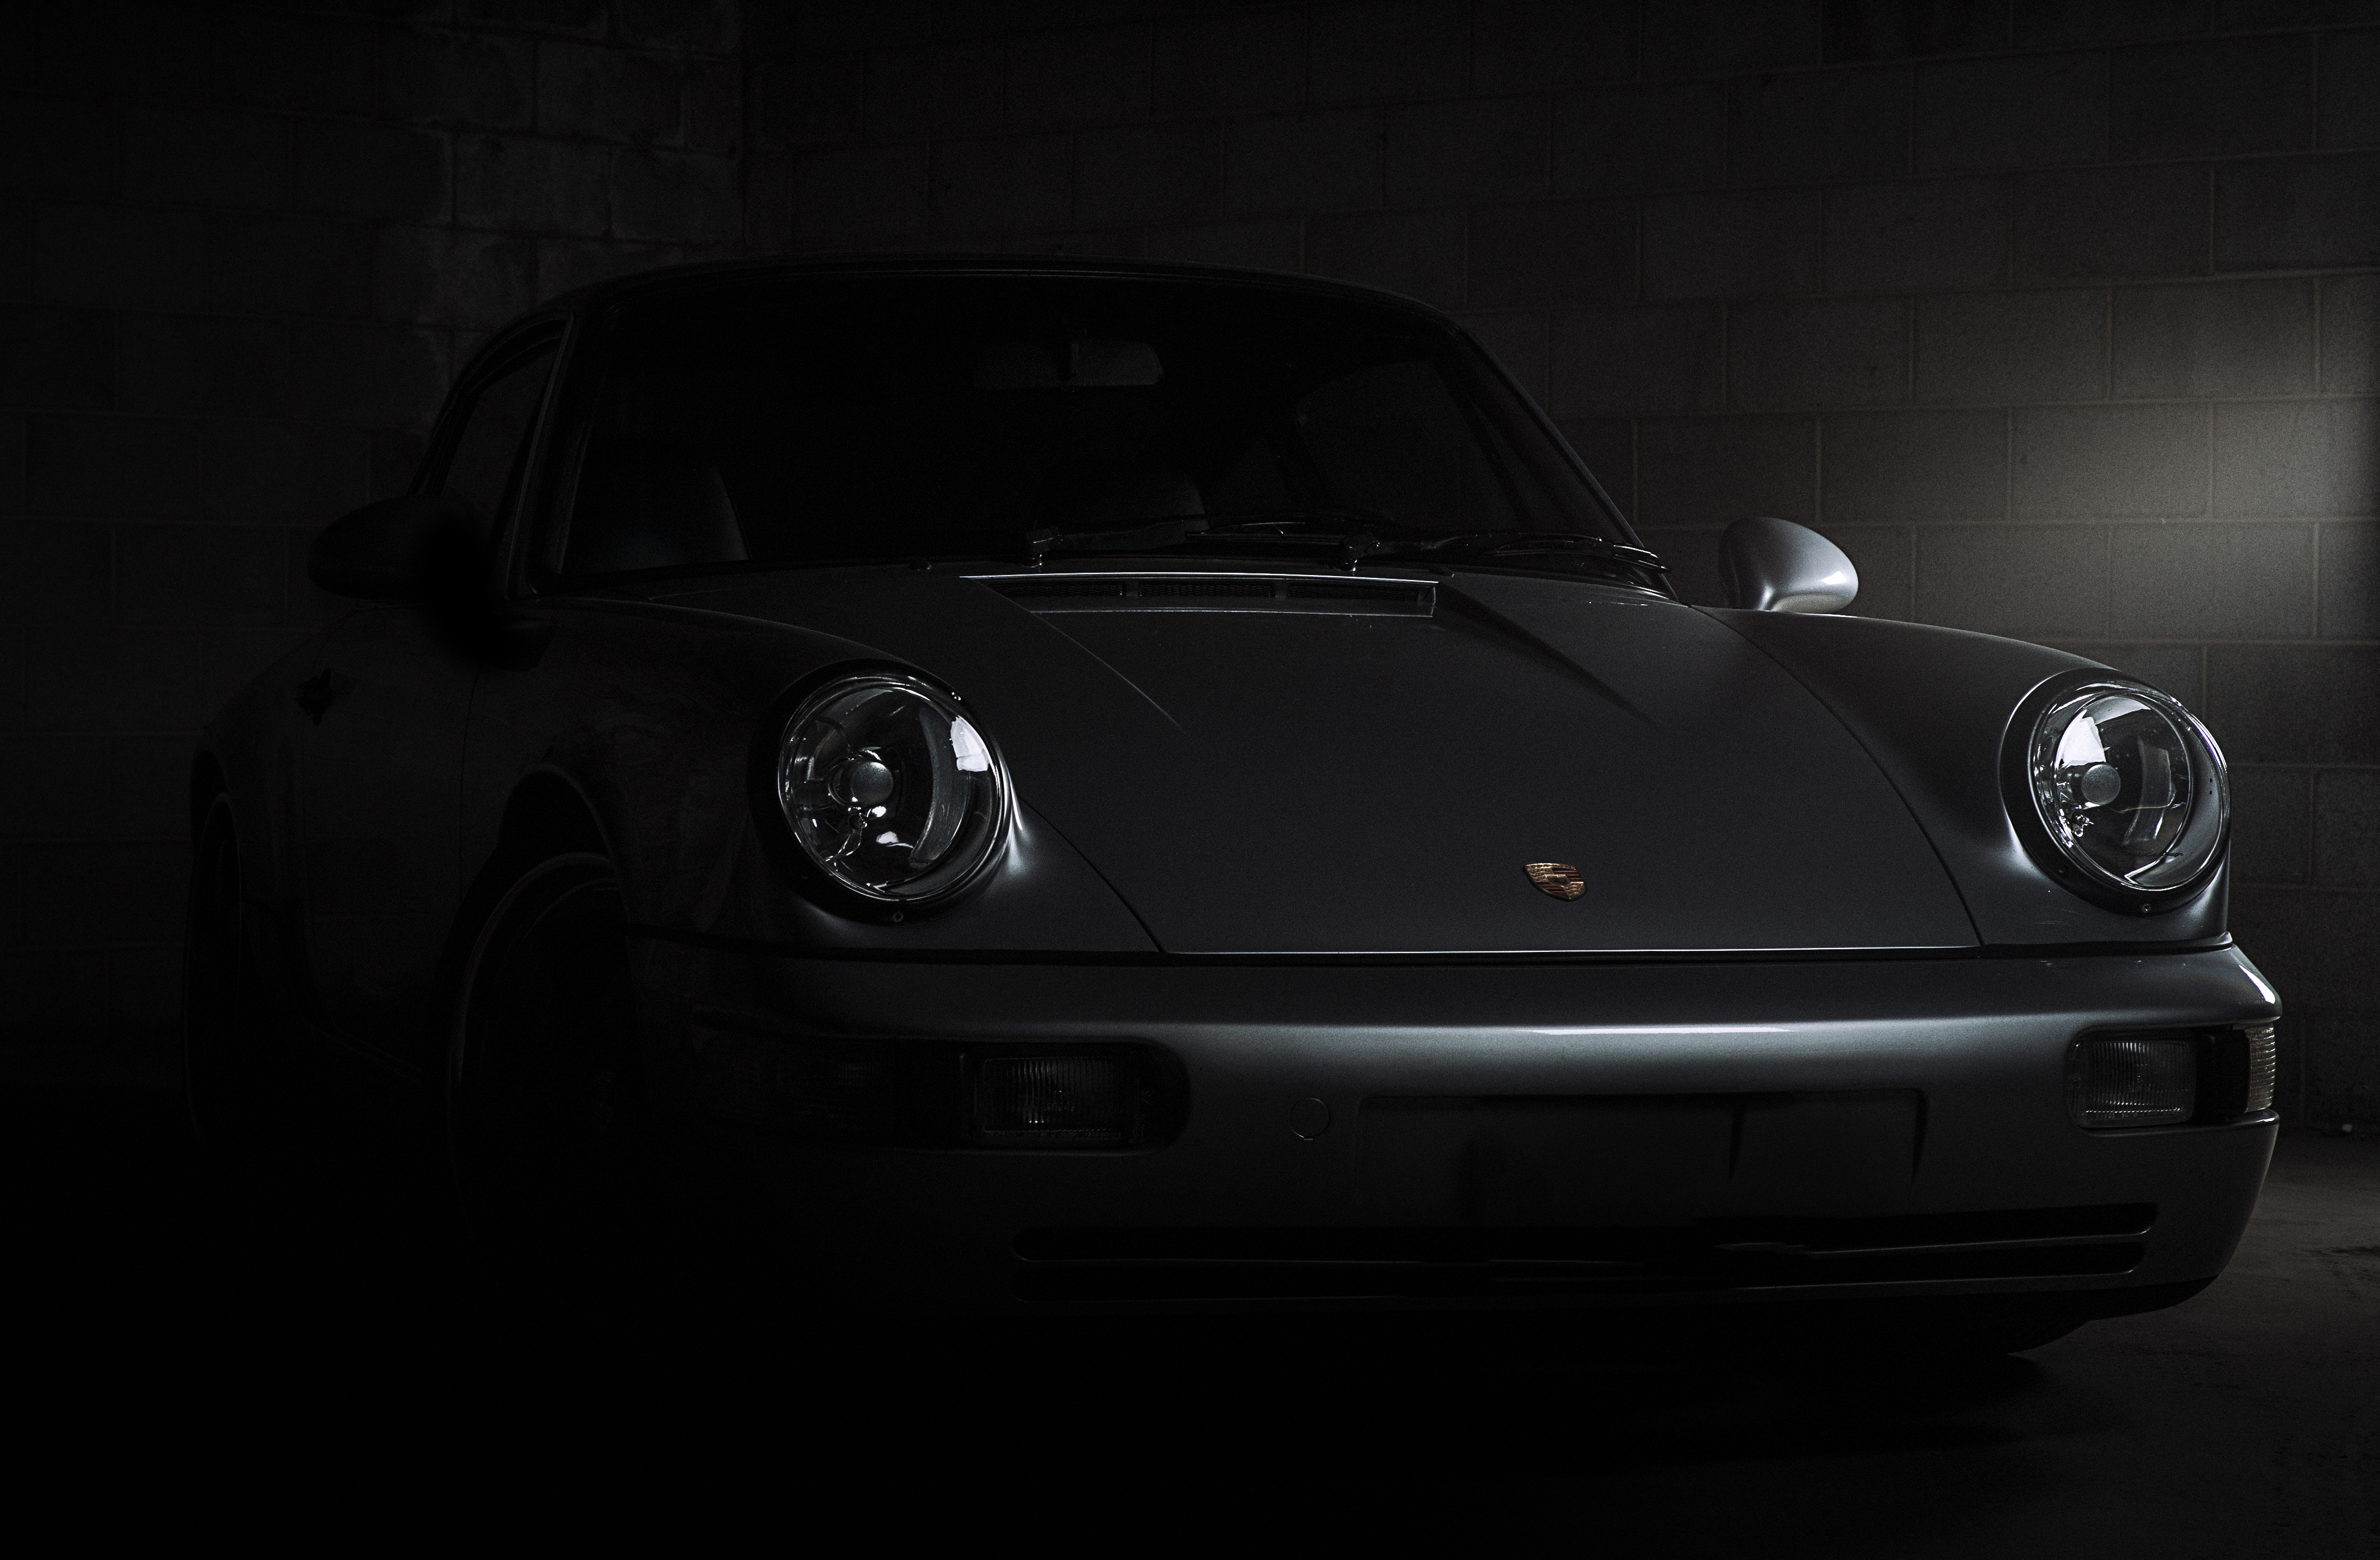 Wallpaper silhouette of Porsche 911 Carrera in darkness